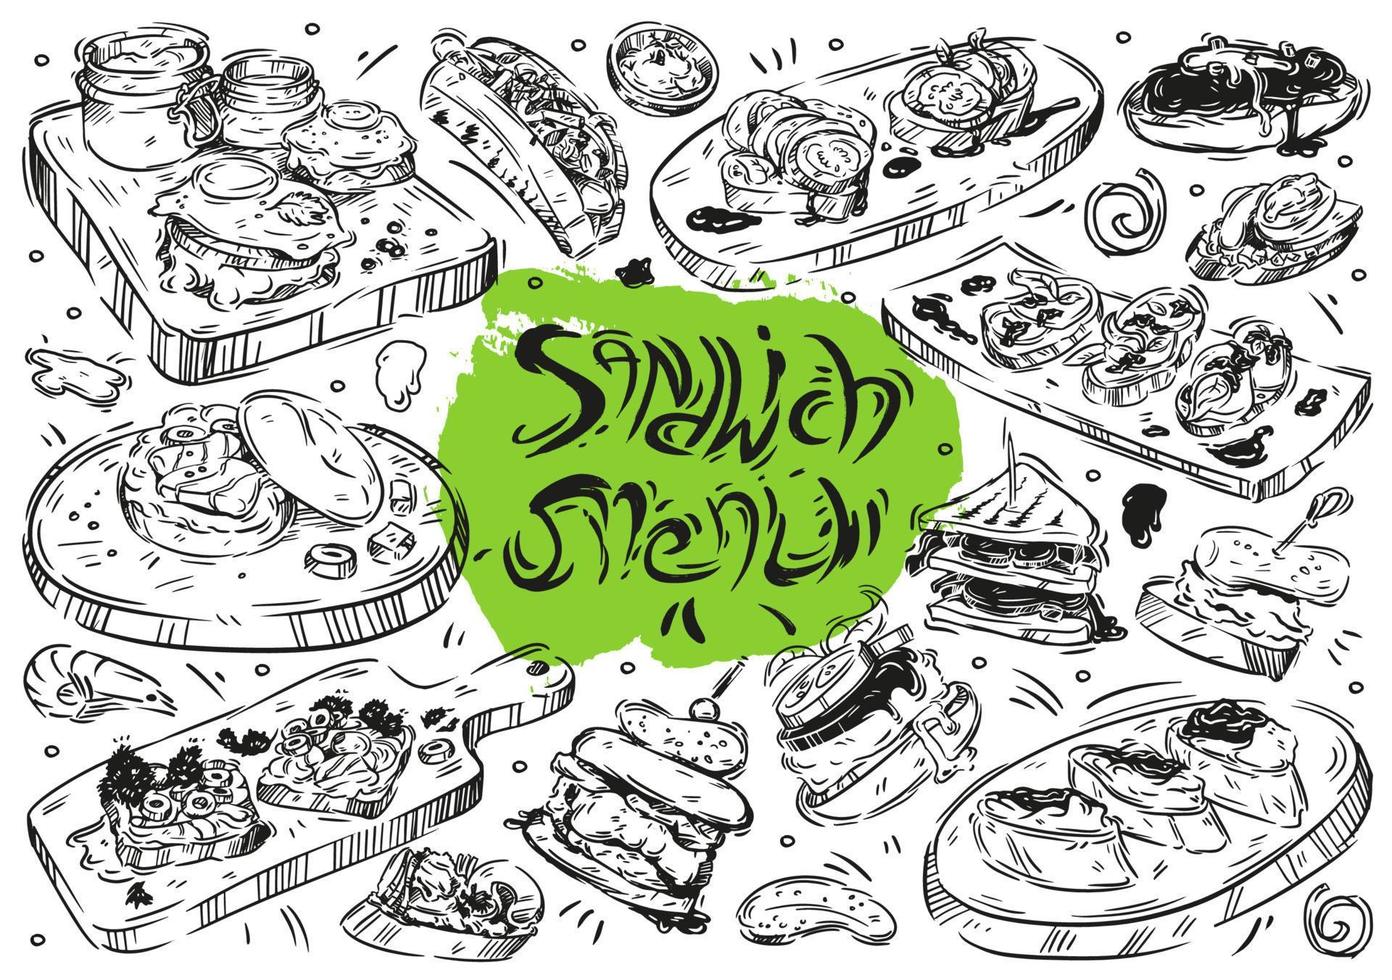 hand getrokken lijn vector illustratie voedsel op witte achtergrond. broodjesmenu, sandwiches, bruschetta, crostini, burger